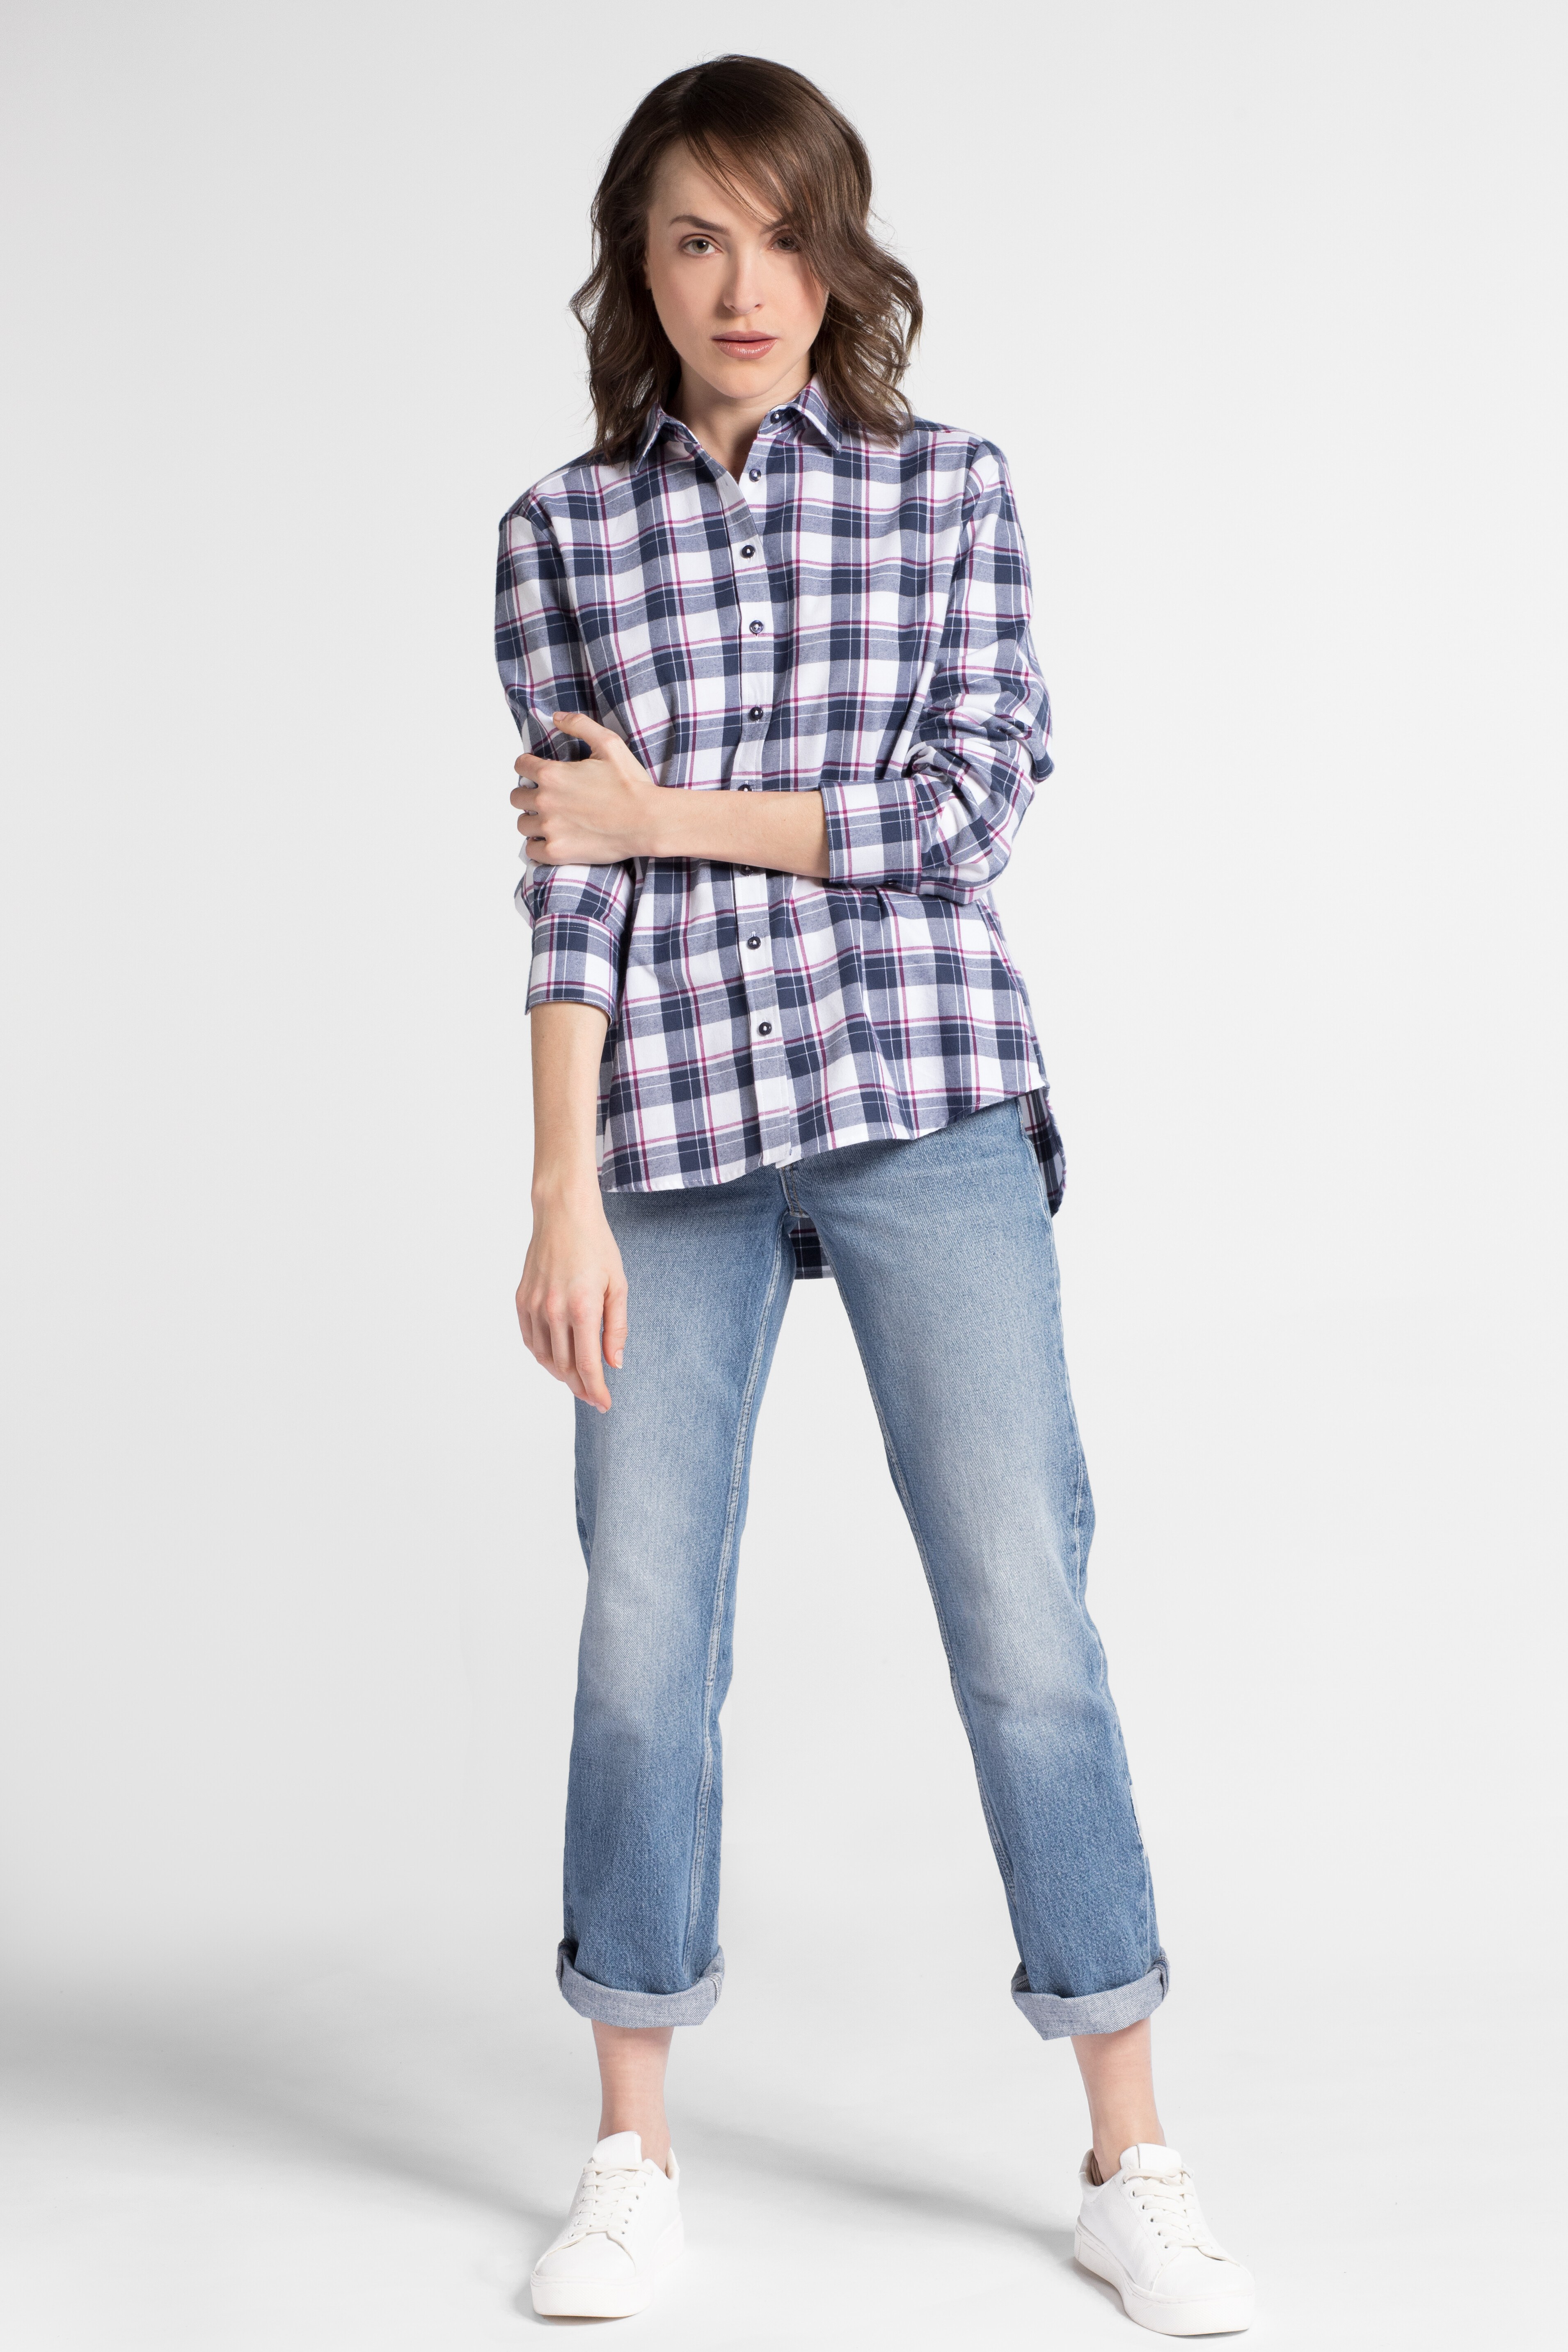 | MODERN Modern Langarm D614.19 Bluse Jeans-Manufaktur Eterna | 6268 | CLASSIC Damen | Bekleidung Blusen | kariert ETERNA Fit blau-weiß Flannel